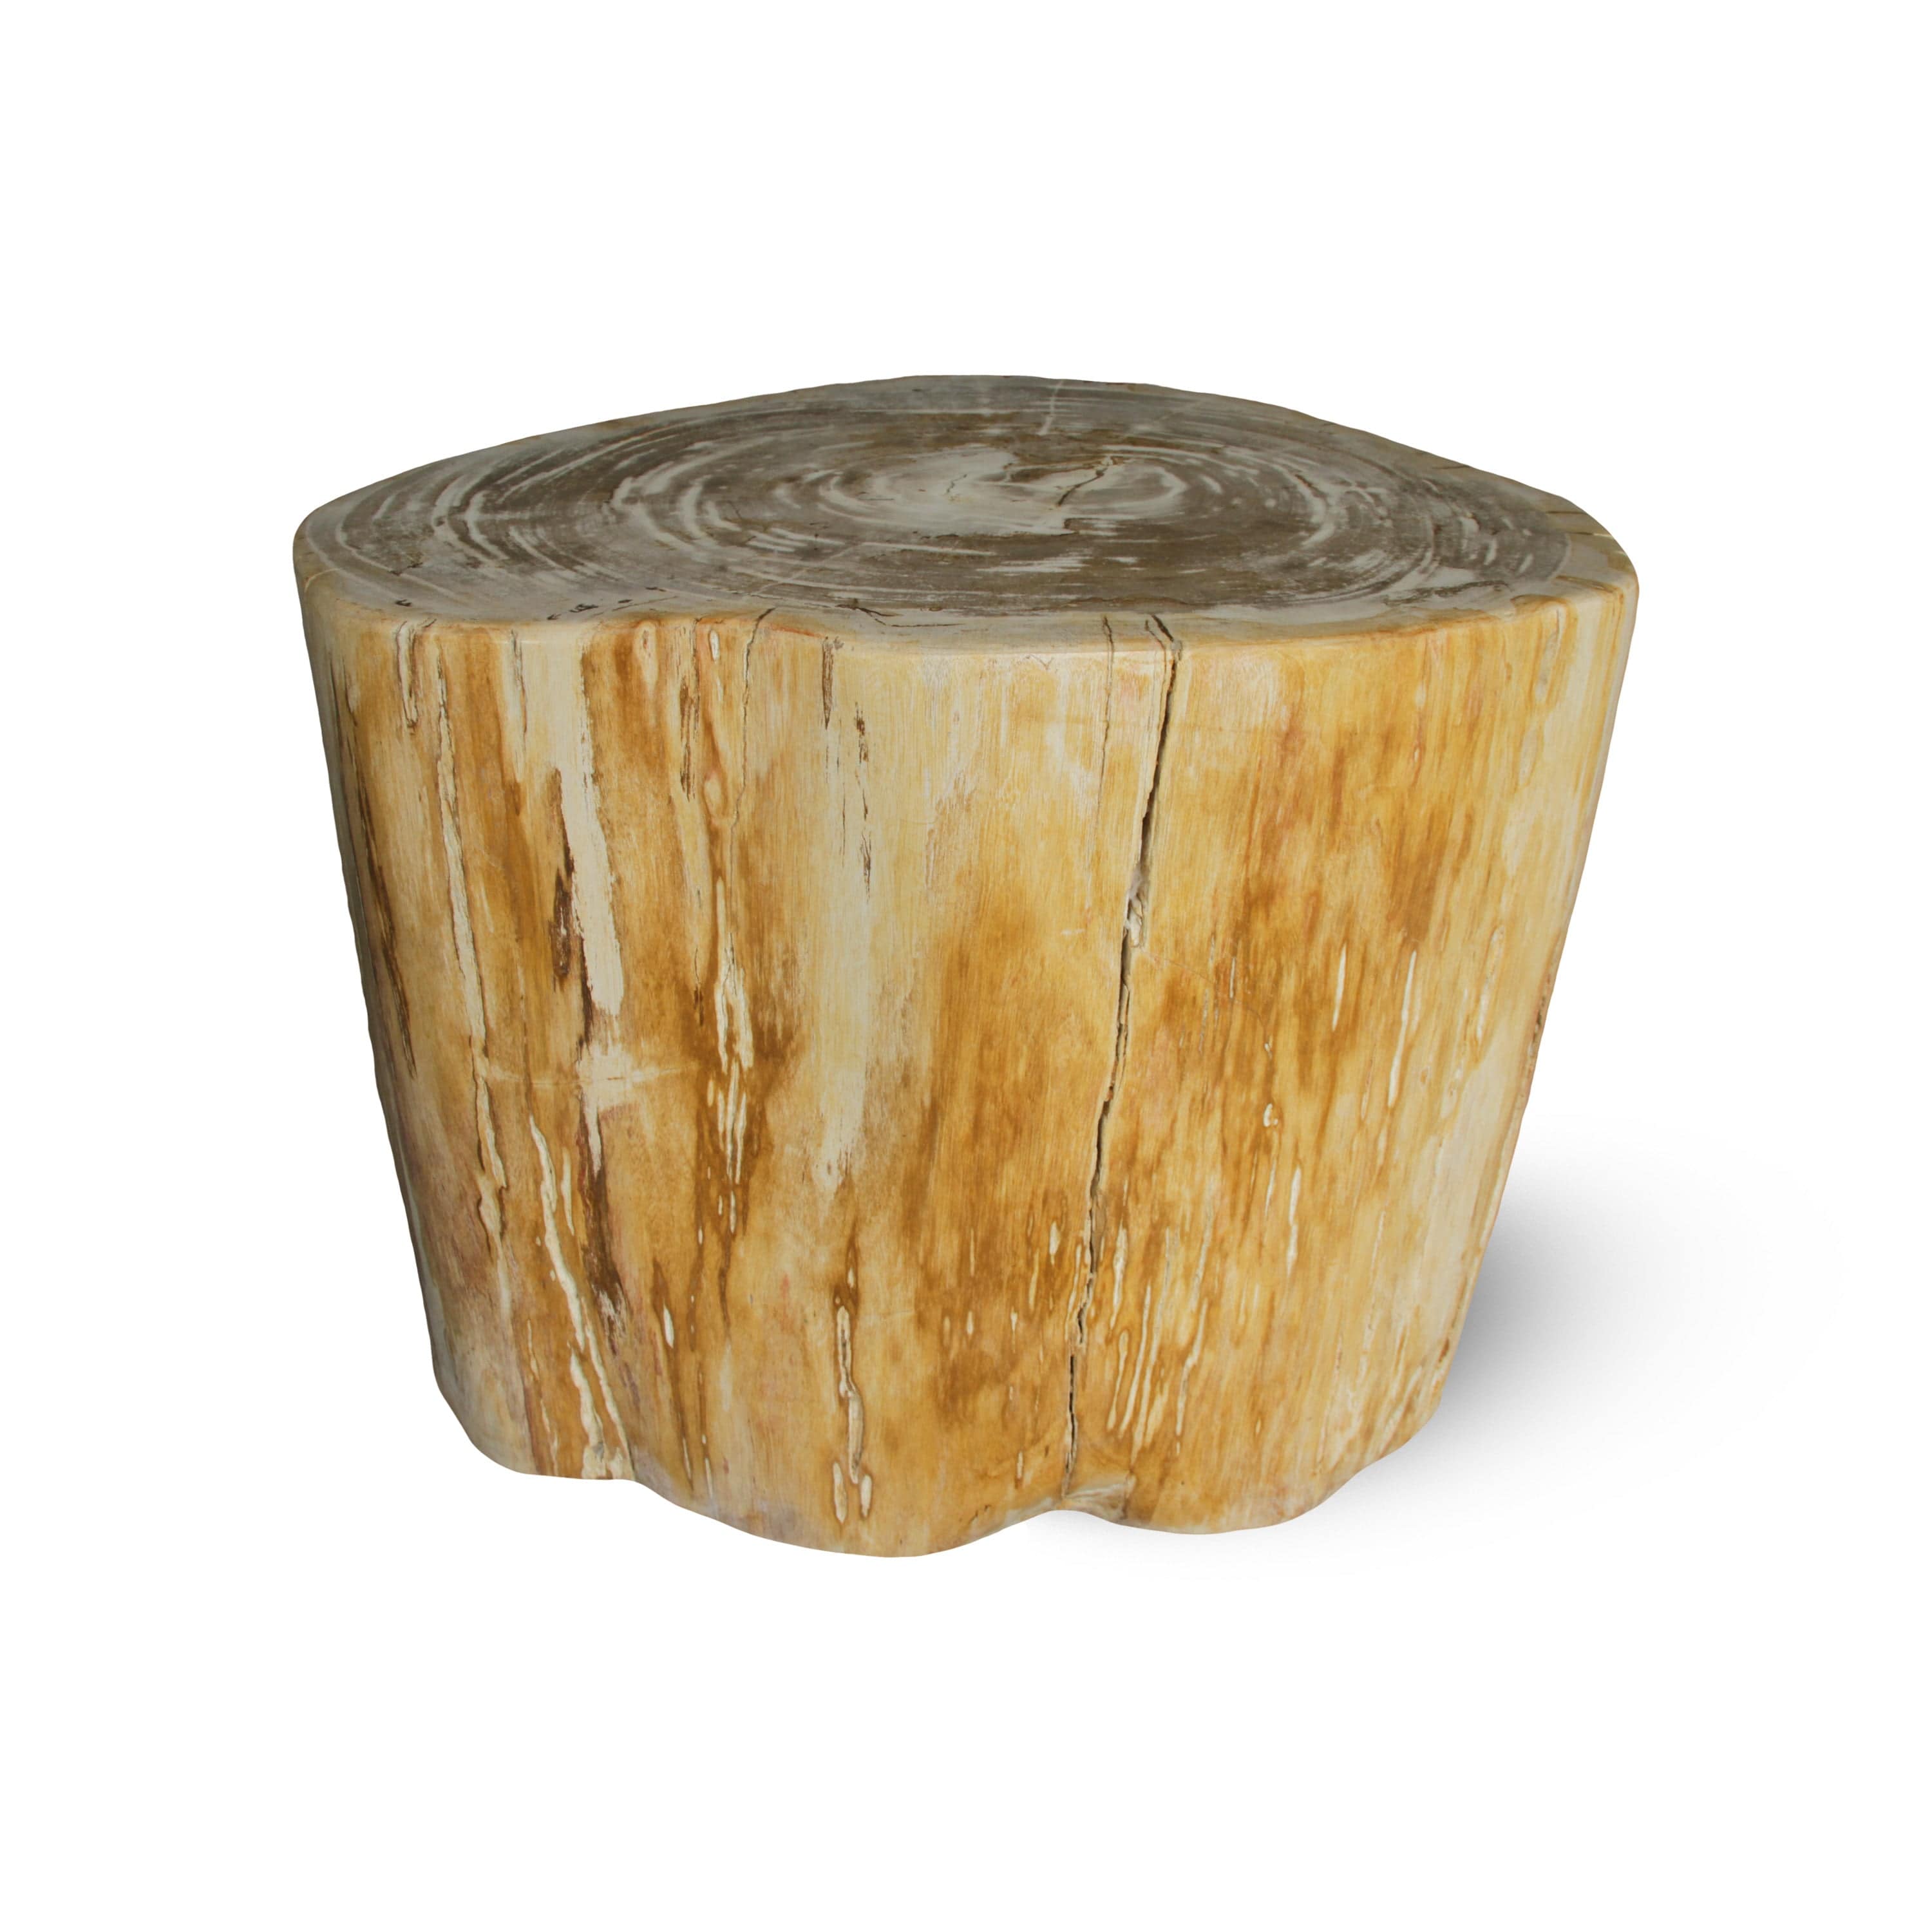 Kalifano Petrified Wood Petrified Wood Round Stump / Stool from Indonesia - 16" / 286 lbs PWS5200.005